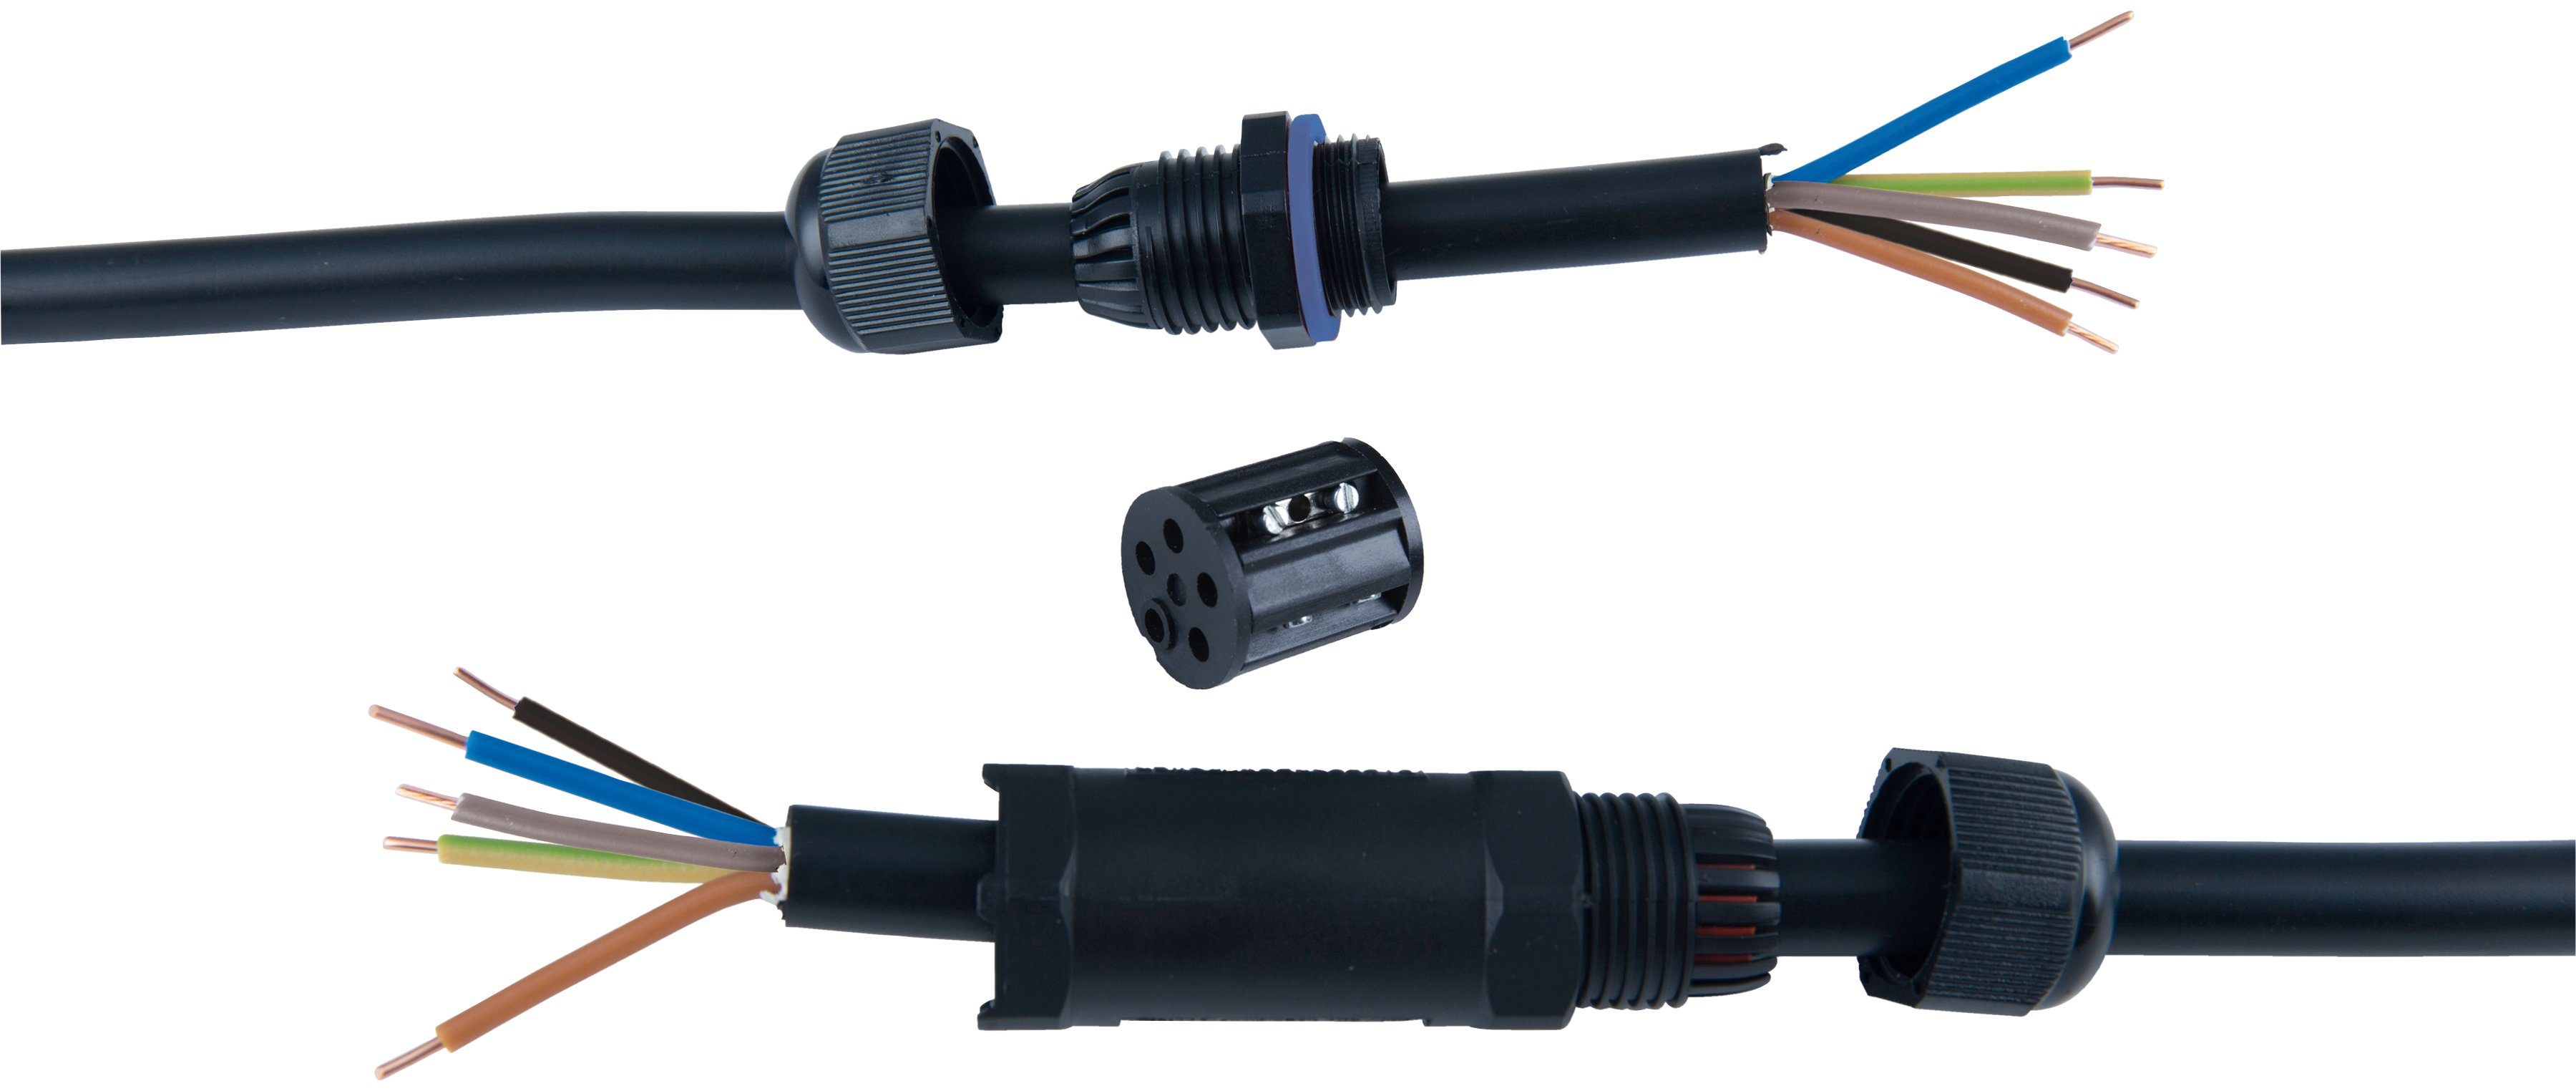 1 m Verbindungsmuffe HEITRONIC Kabel-Verbindungsstück Kabelmuffe IP68, wasserdicht 1-tlg., bis 5-polig Wassertiefe